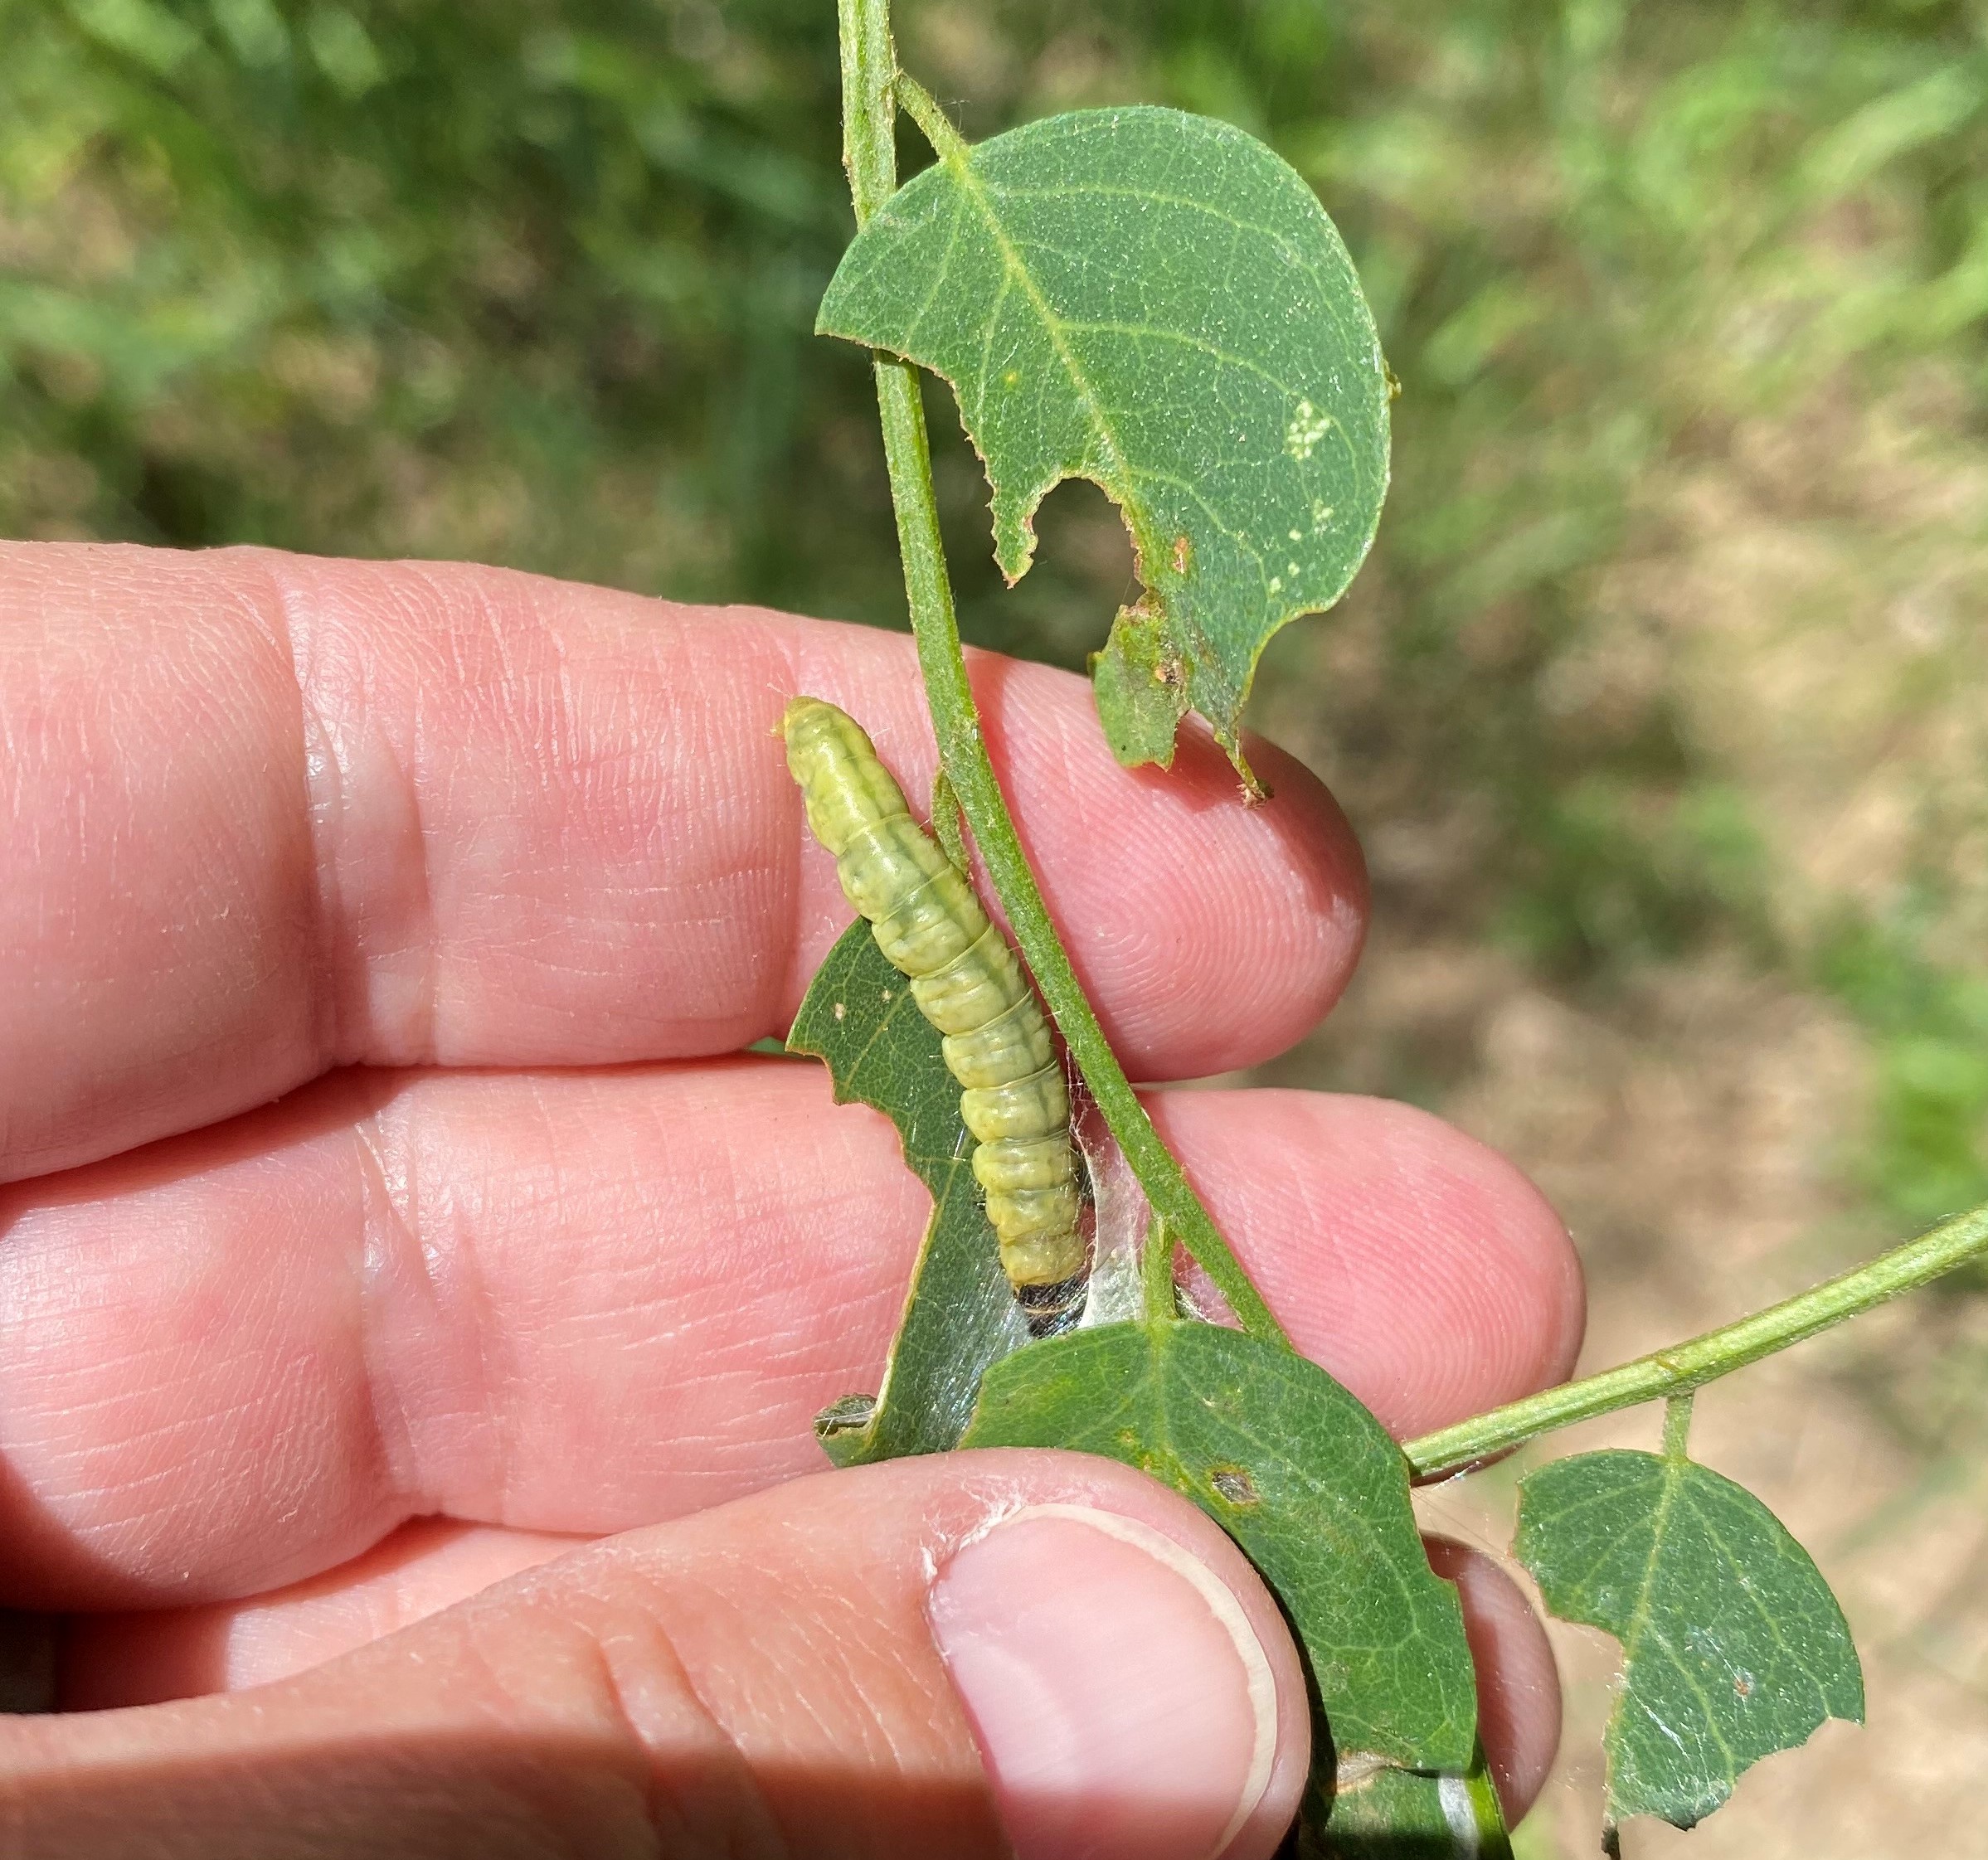 A green caterpillar feeds on black locust leaves.